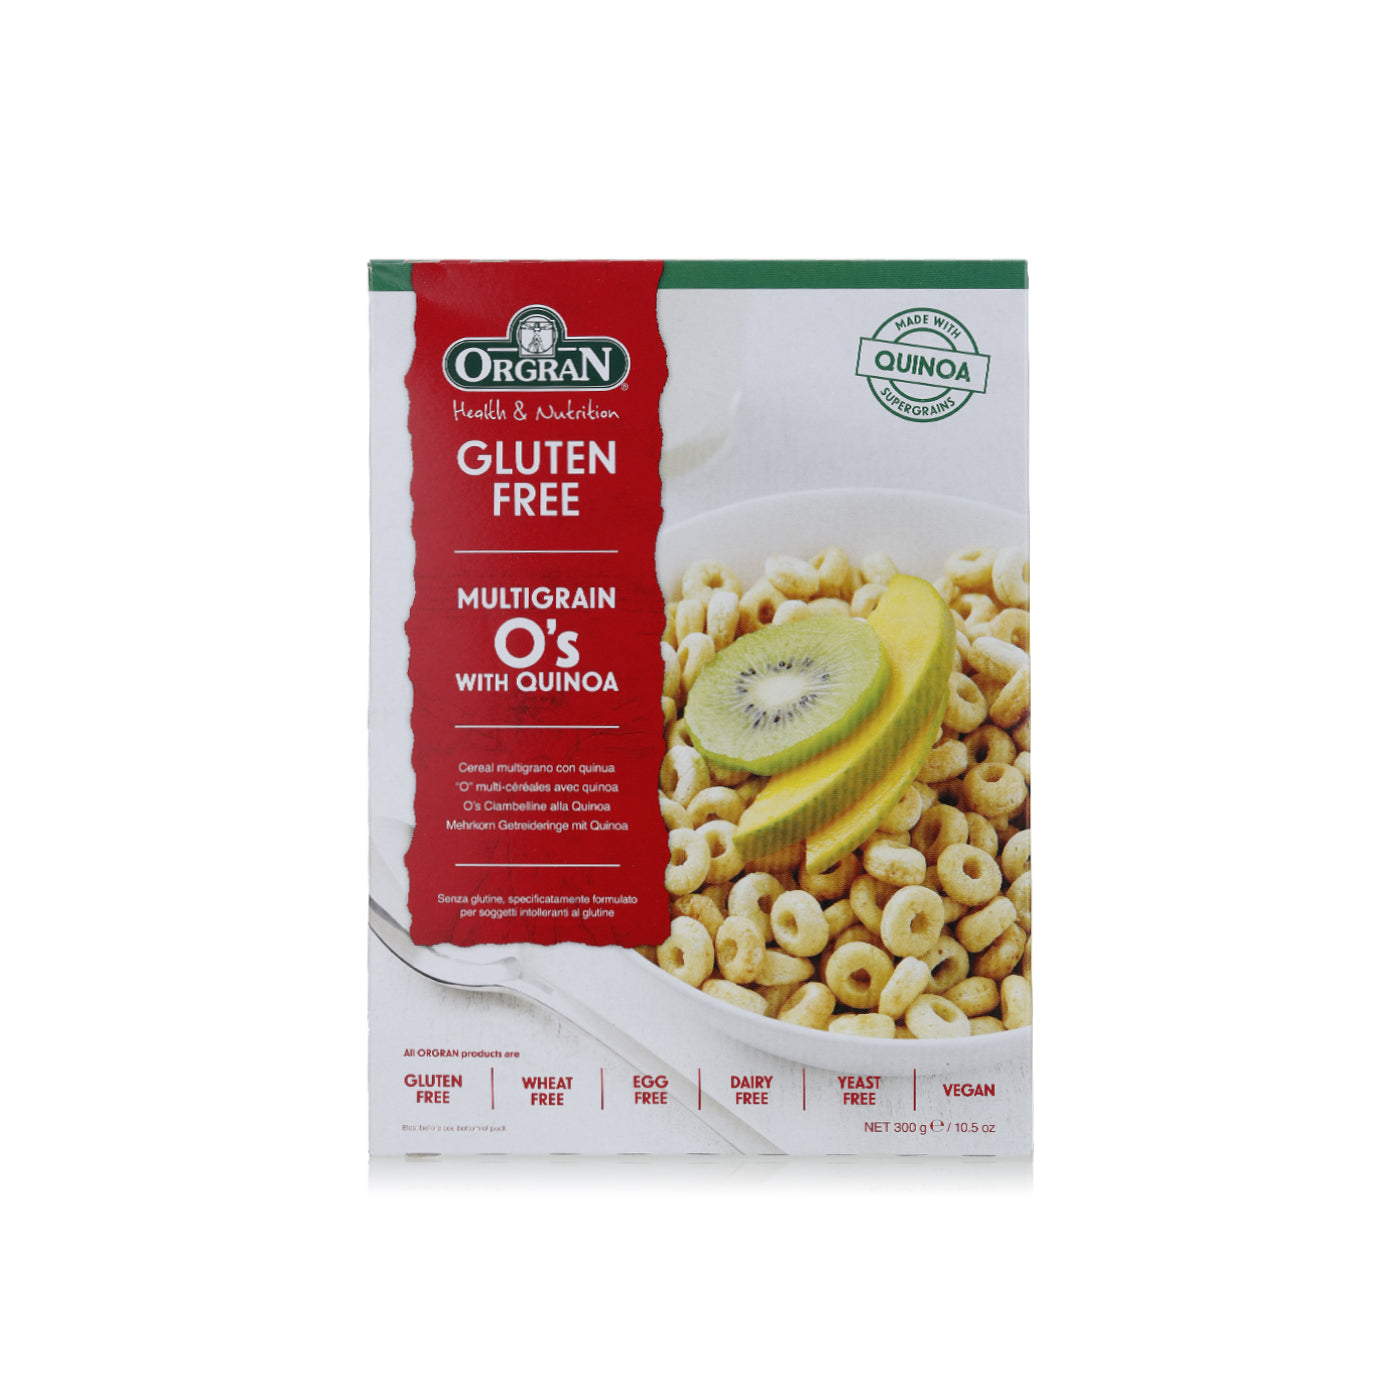 ORGRAN Multigrain Os With Quinoa, 300g